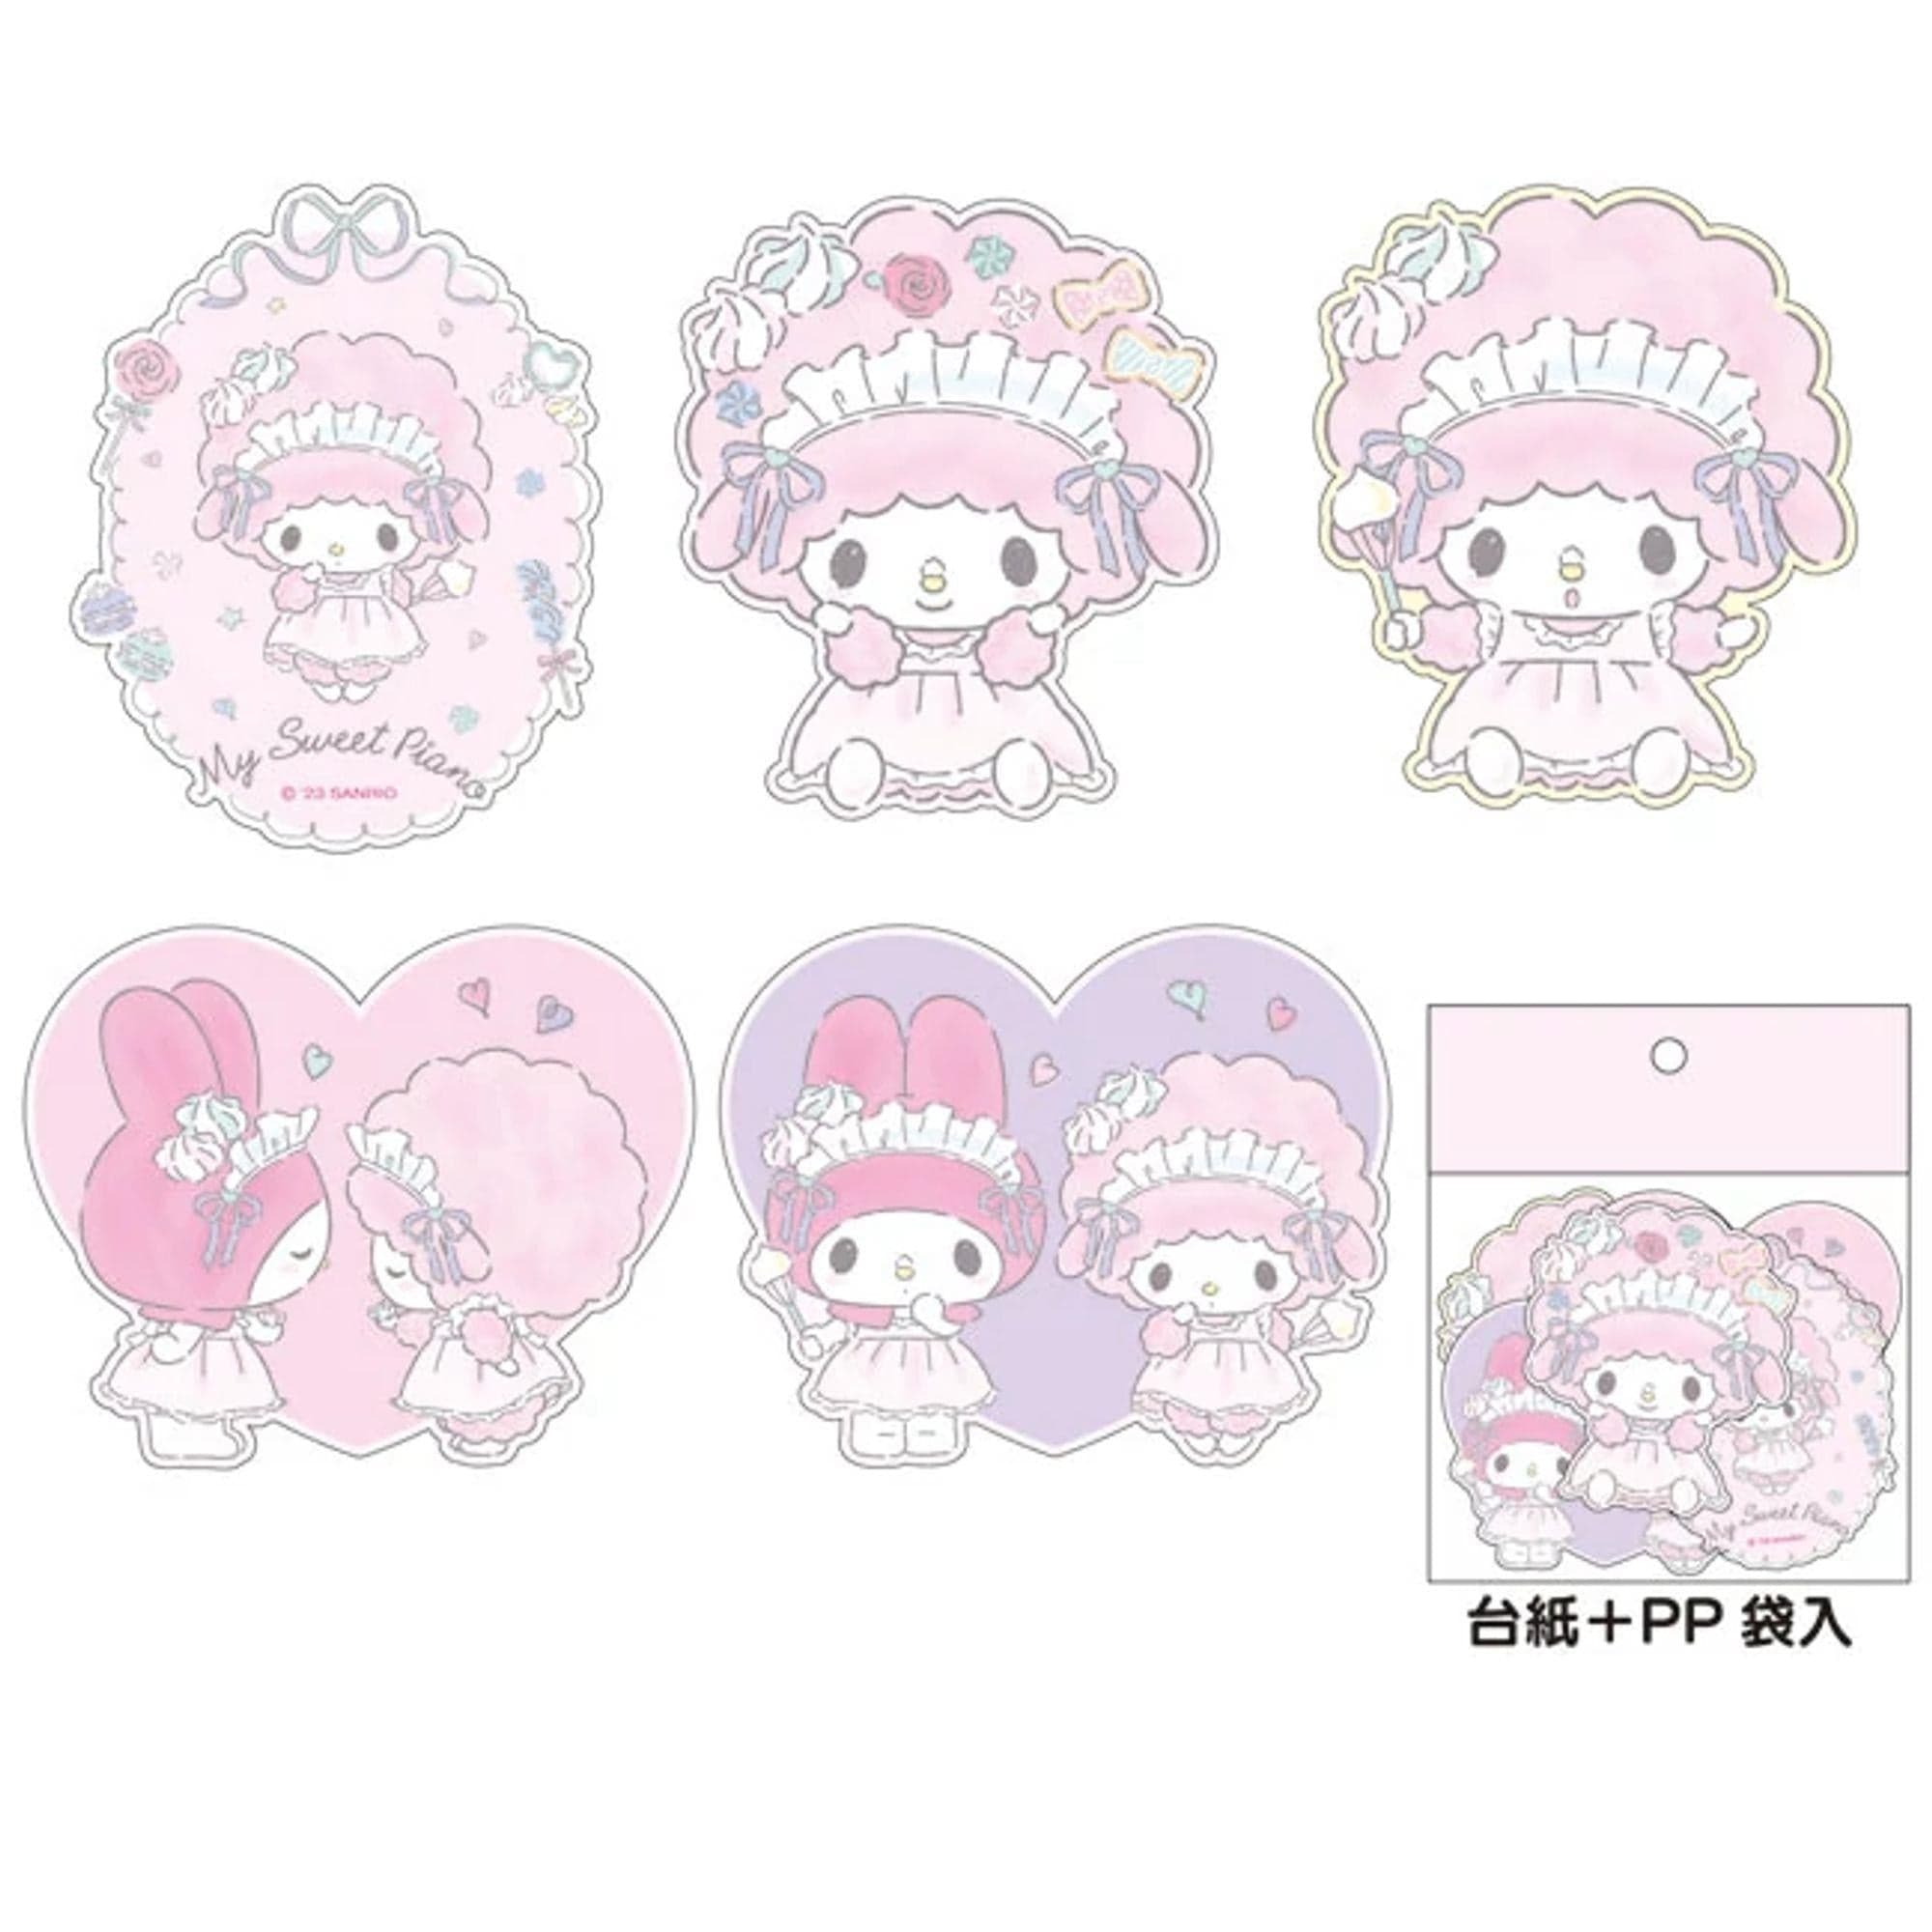 Enesco Sanrio Good Morning My Sweet Piano & My Melody Stickers Kawaii Gifts